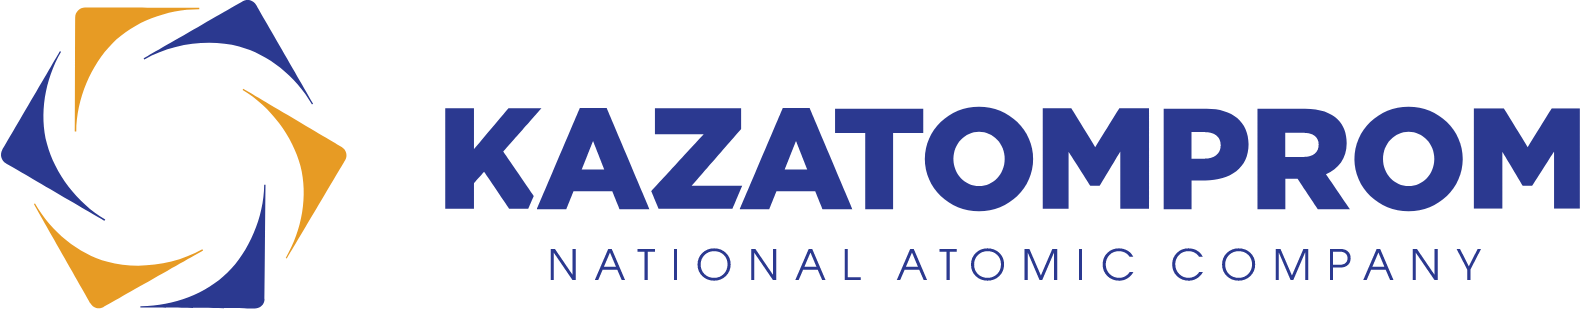 Kazatomprom logo large (transparent PNG)